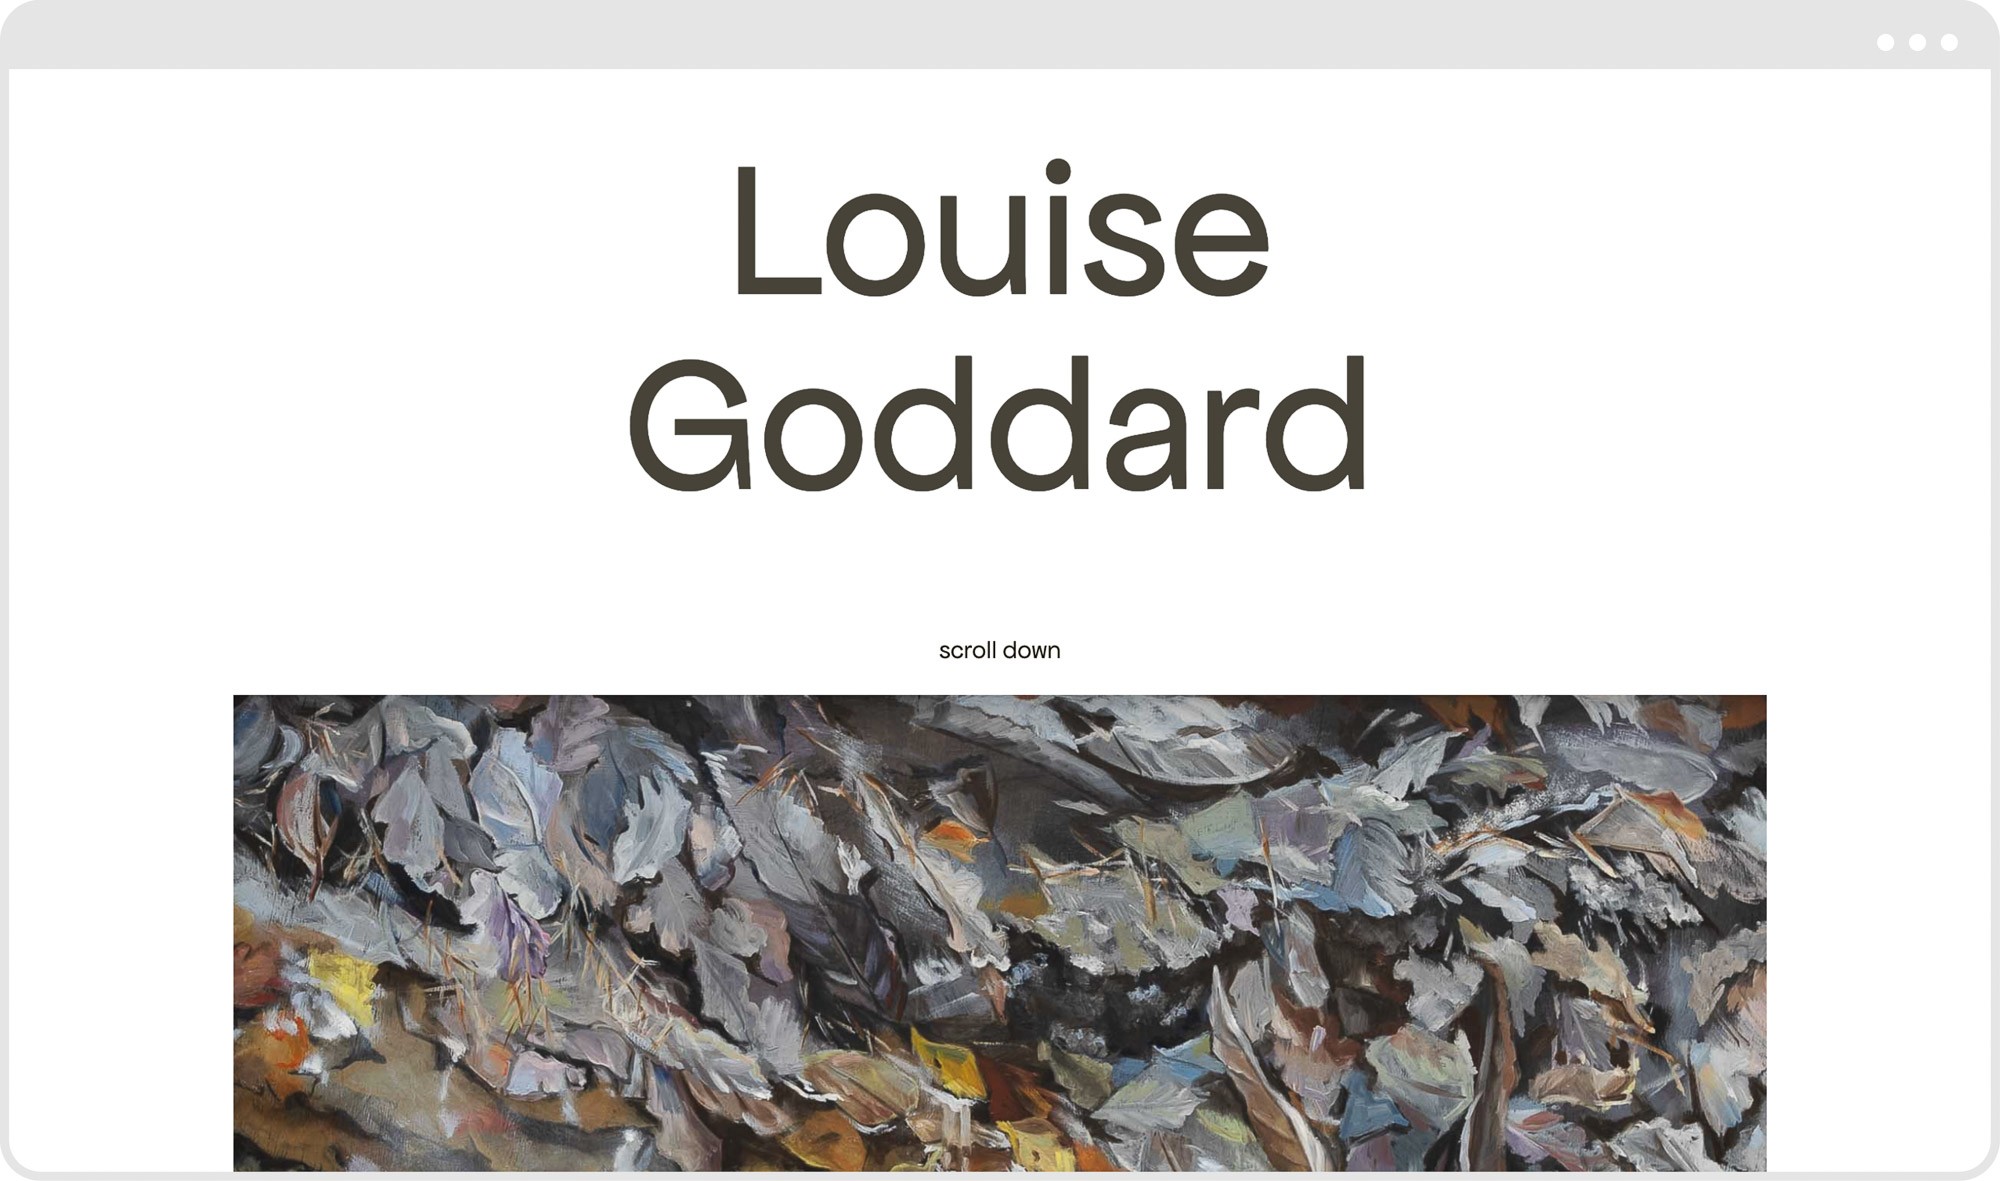 Louise Goddard